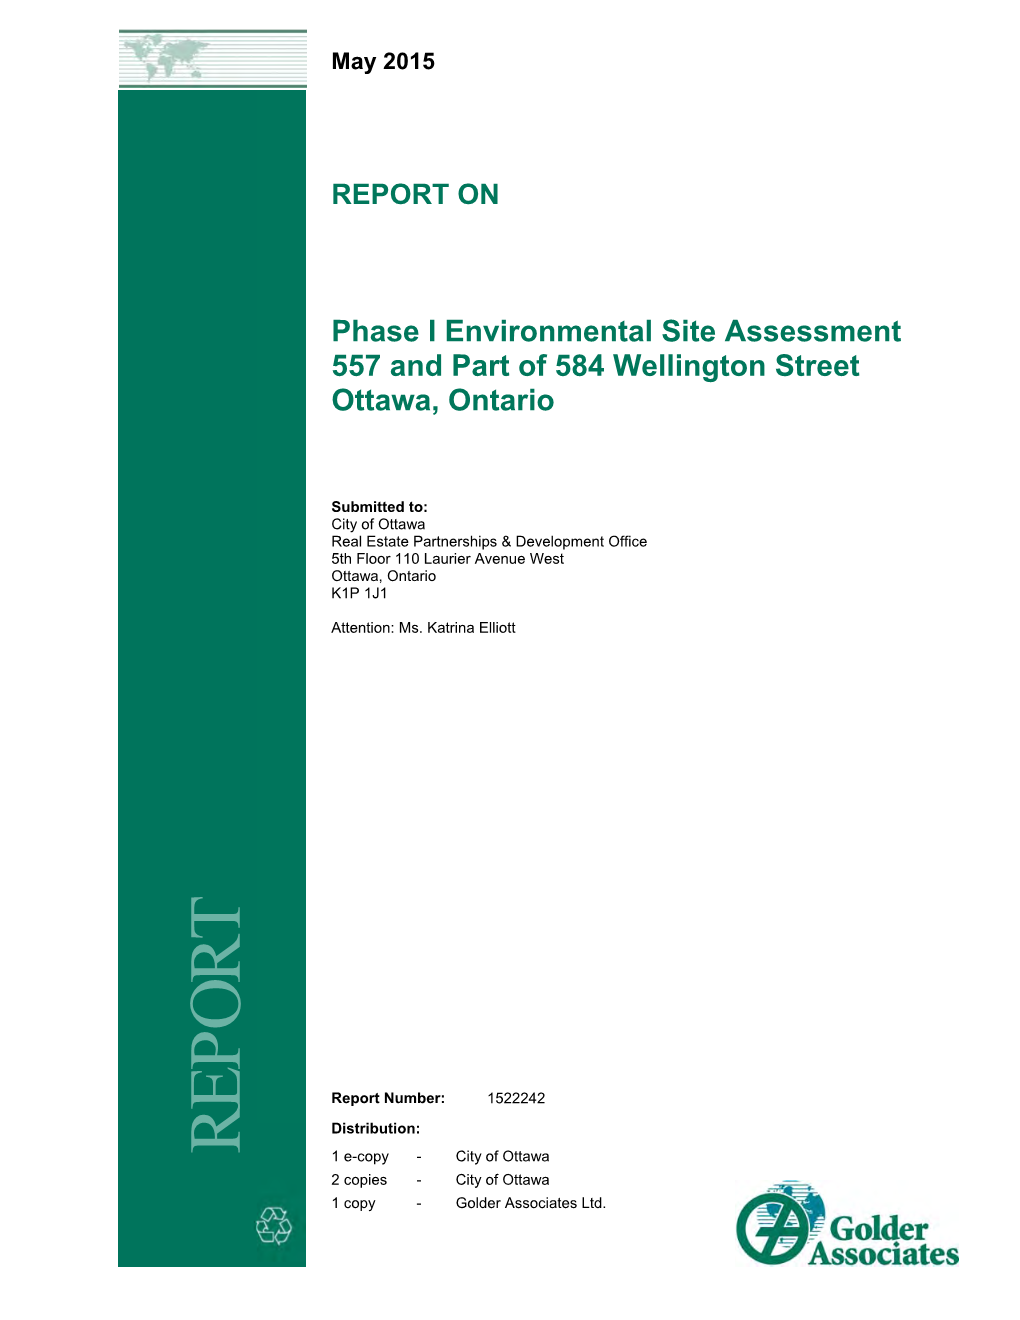 Phase I Environmental Site Assessment 557 and Part of 584 Wellington Street Ottawa, Ontario